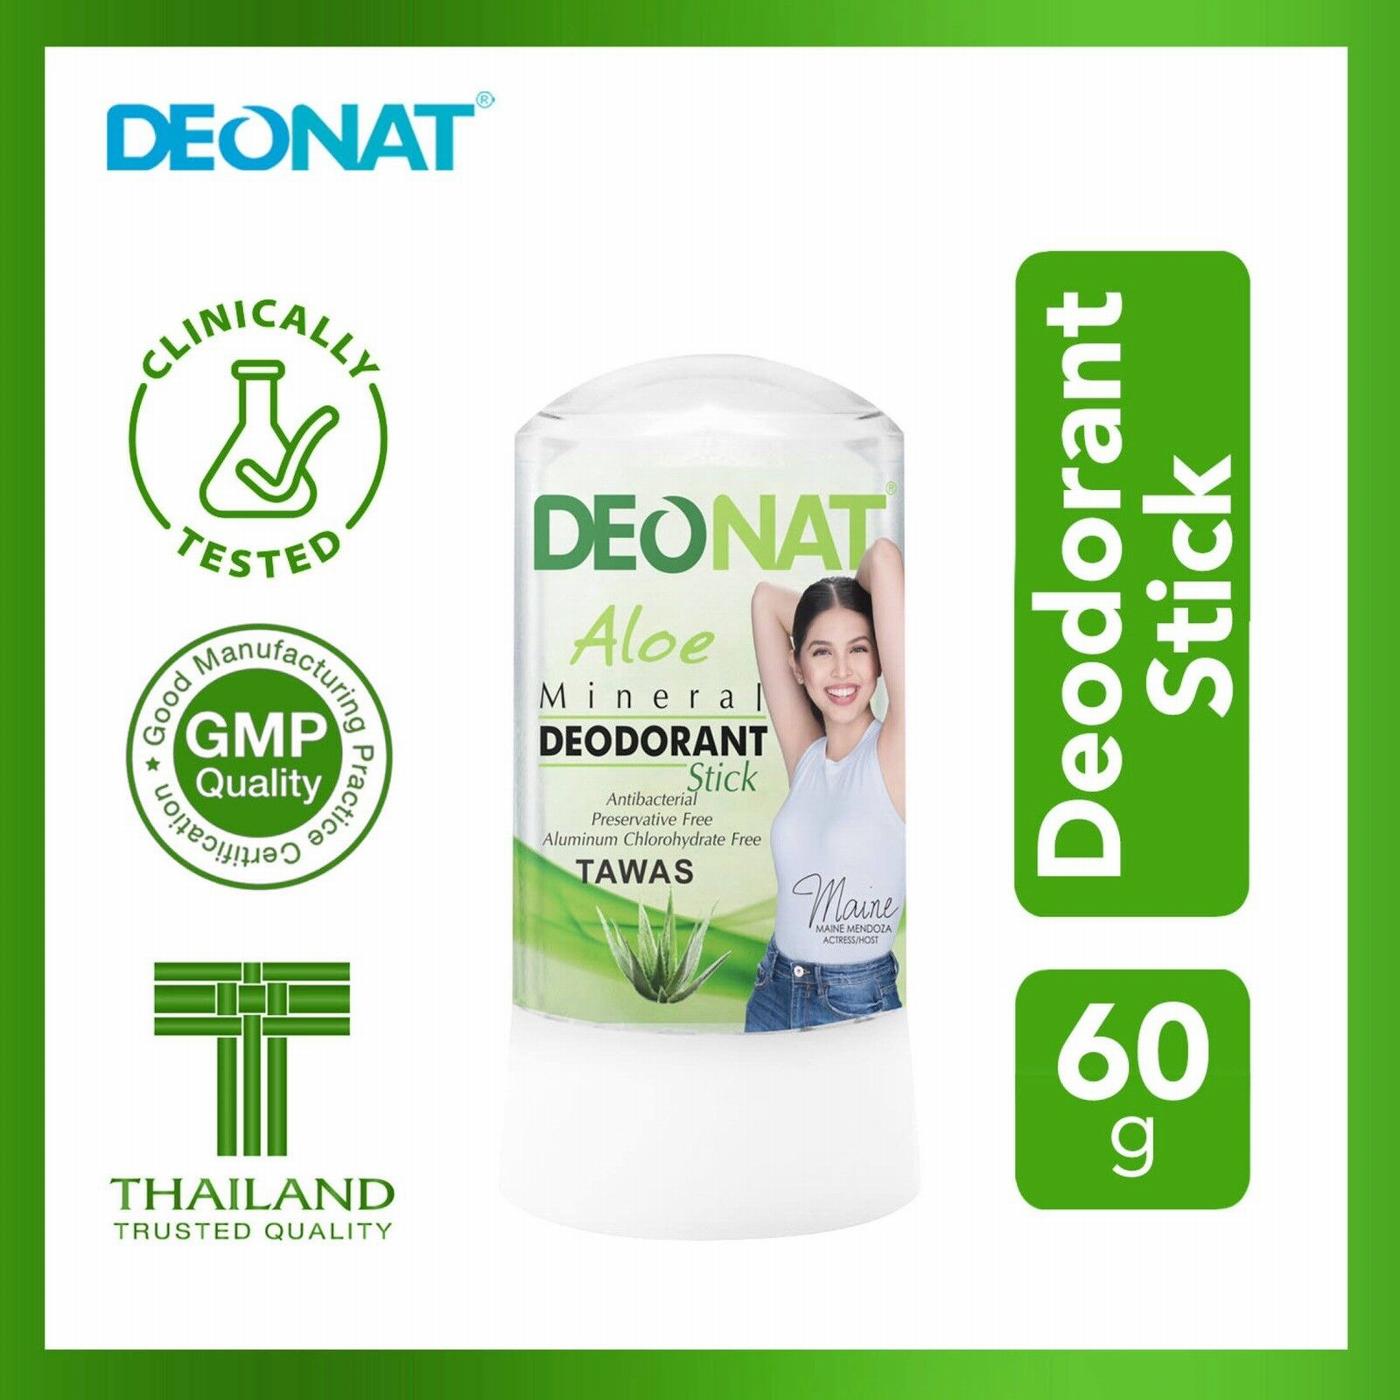 DEONAT ALOE Mineral Deodorant  Stick - TAWAS! Antiperspirant 60g